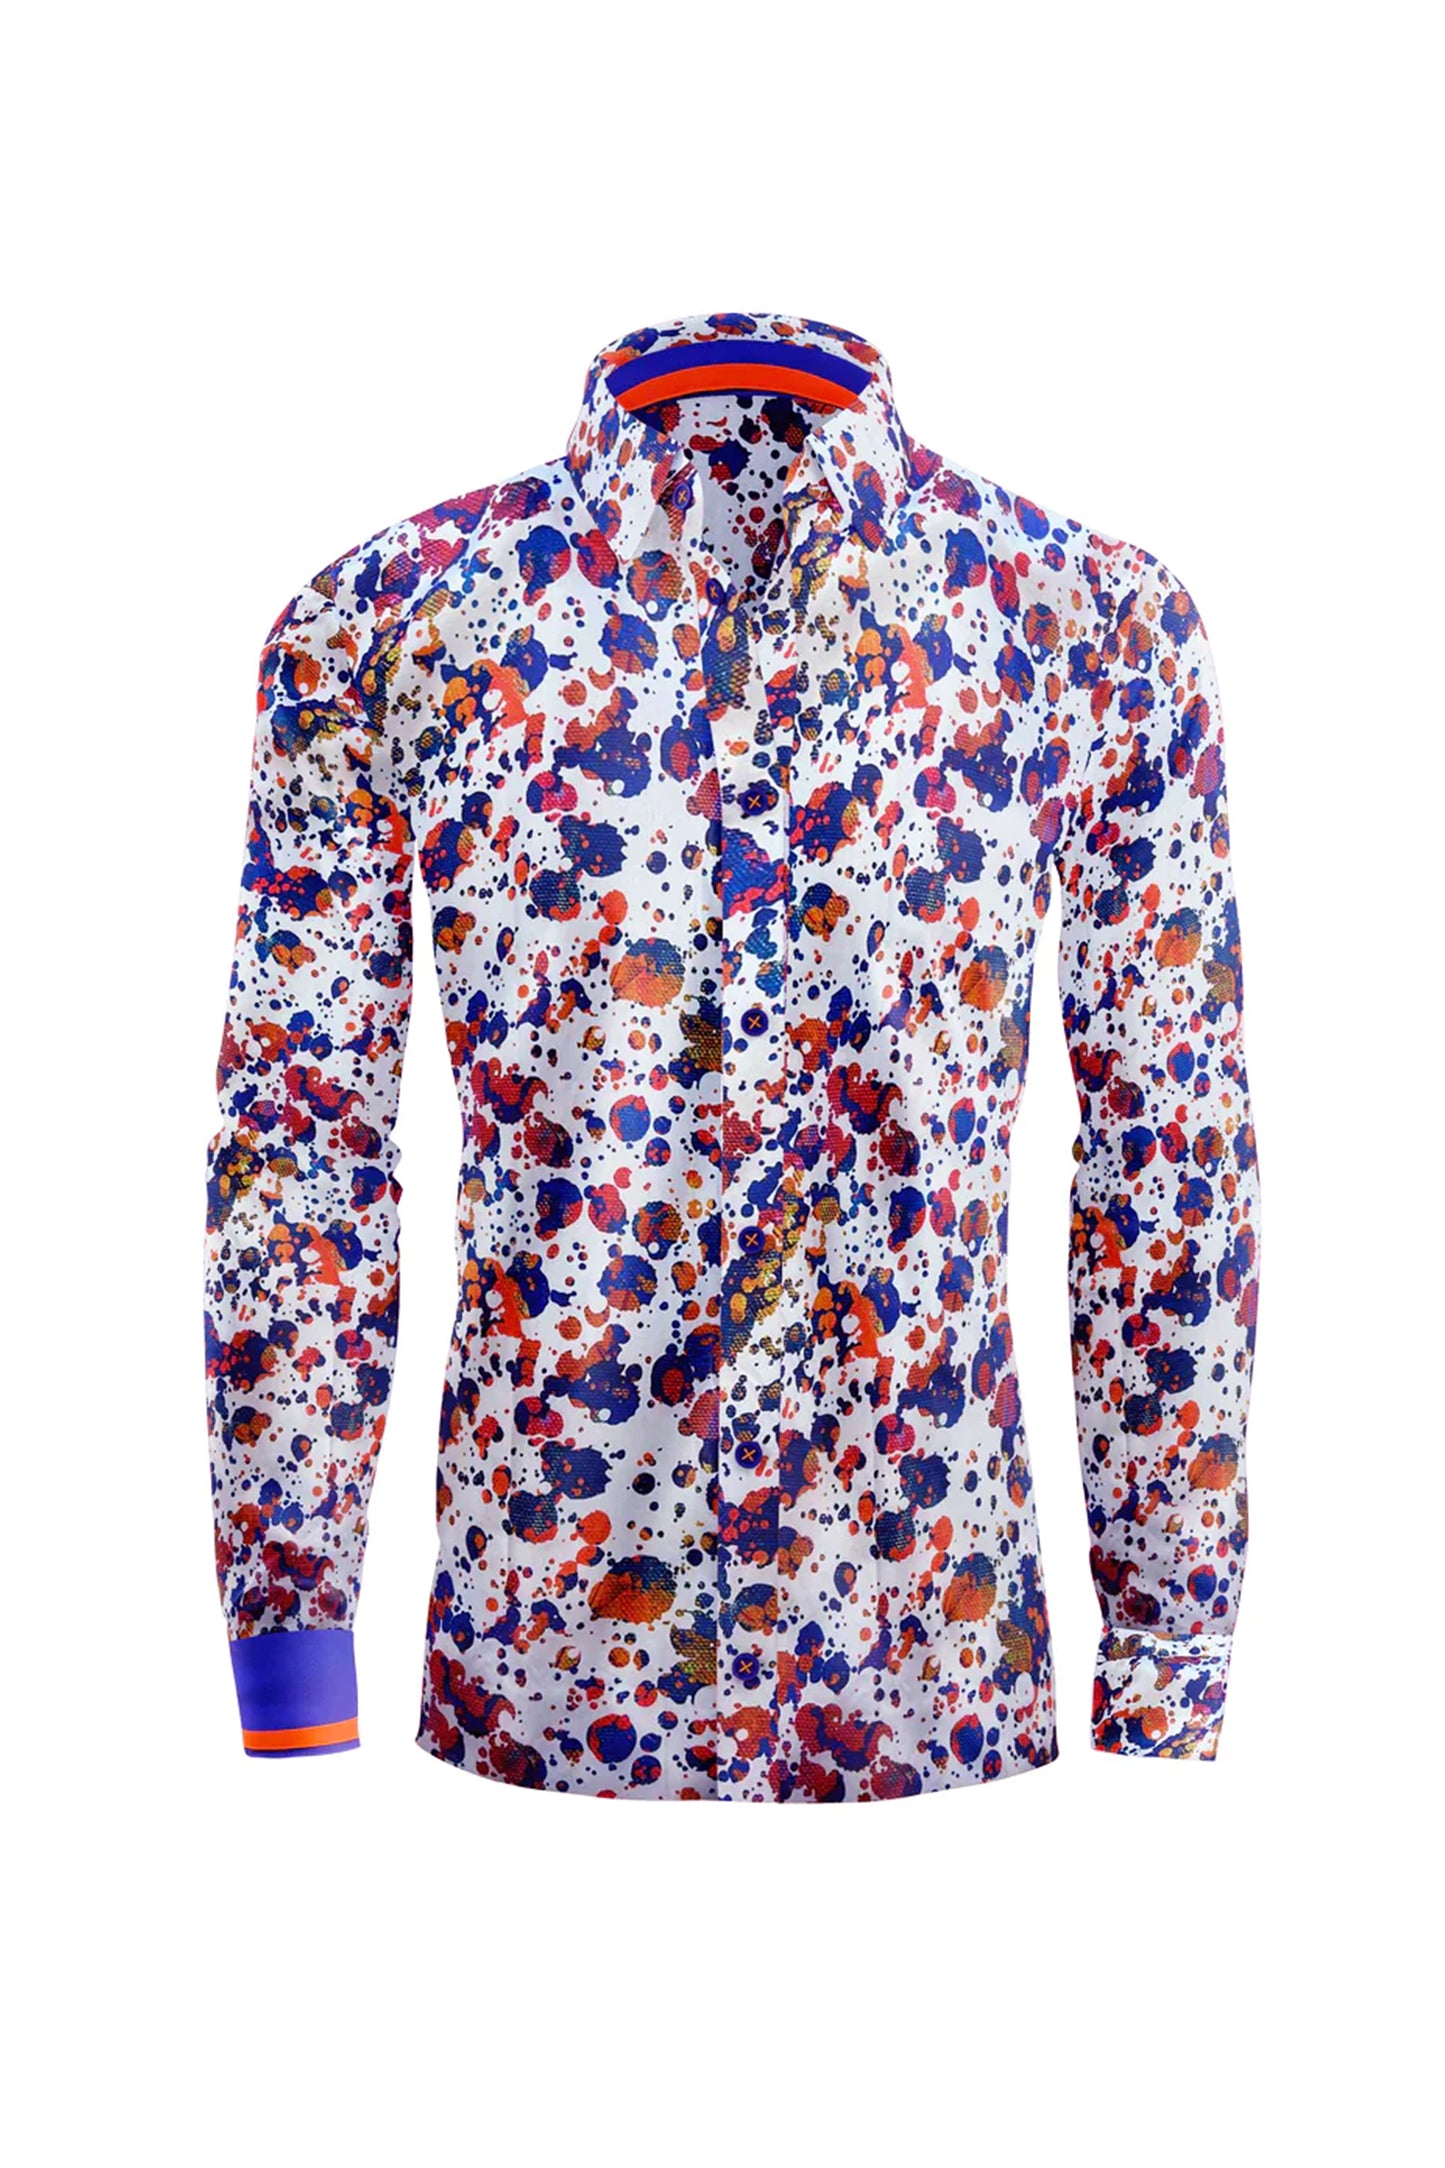 Coral Reef Splash Dress Shirt CASUAL SHIRT On Sale 30% Off Vercini